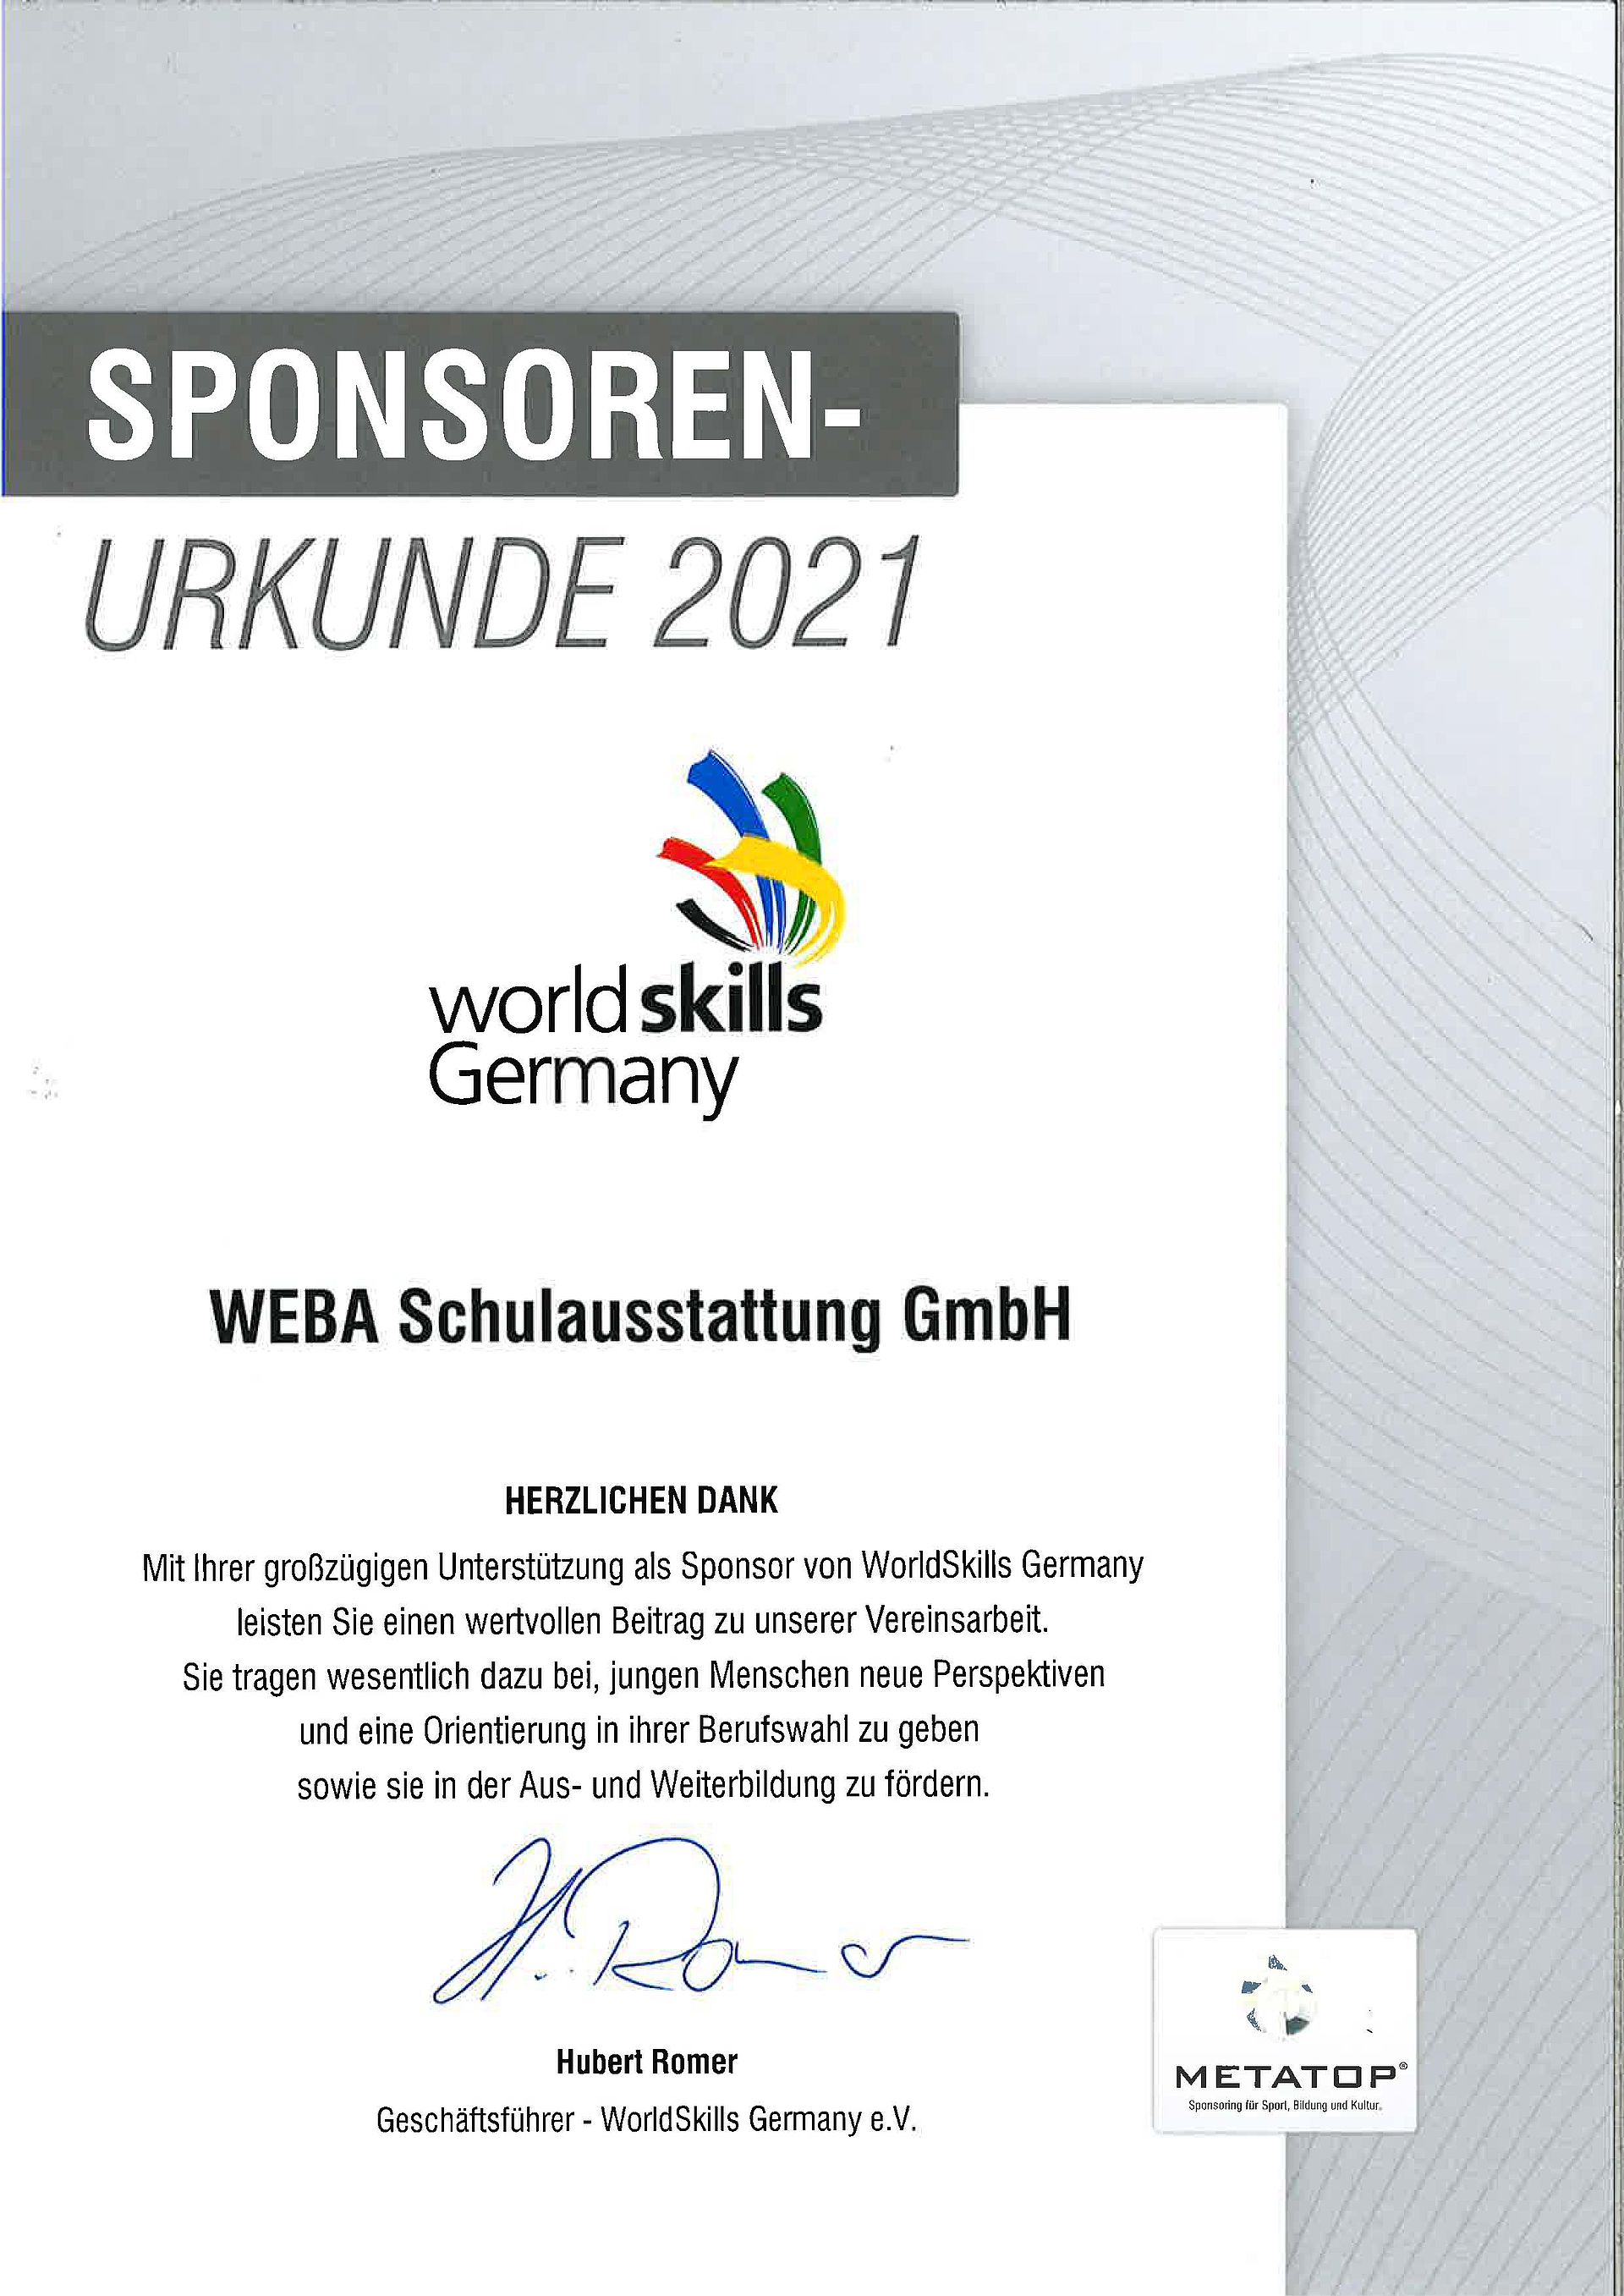 WEBA Sponsorenurkunde "WorldSkills Germany"